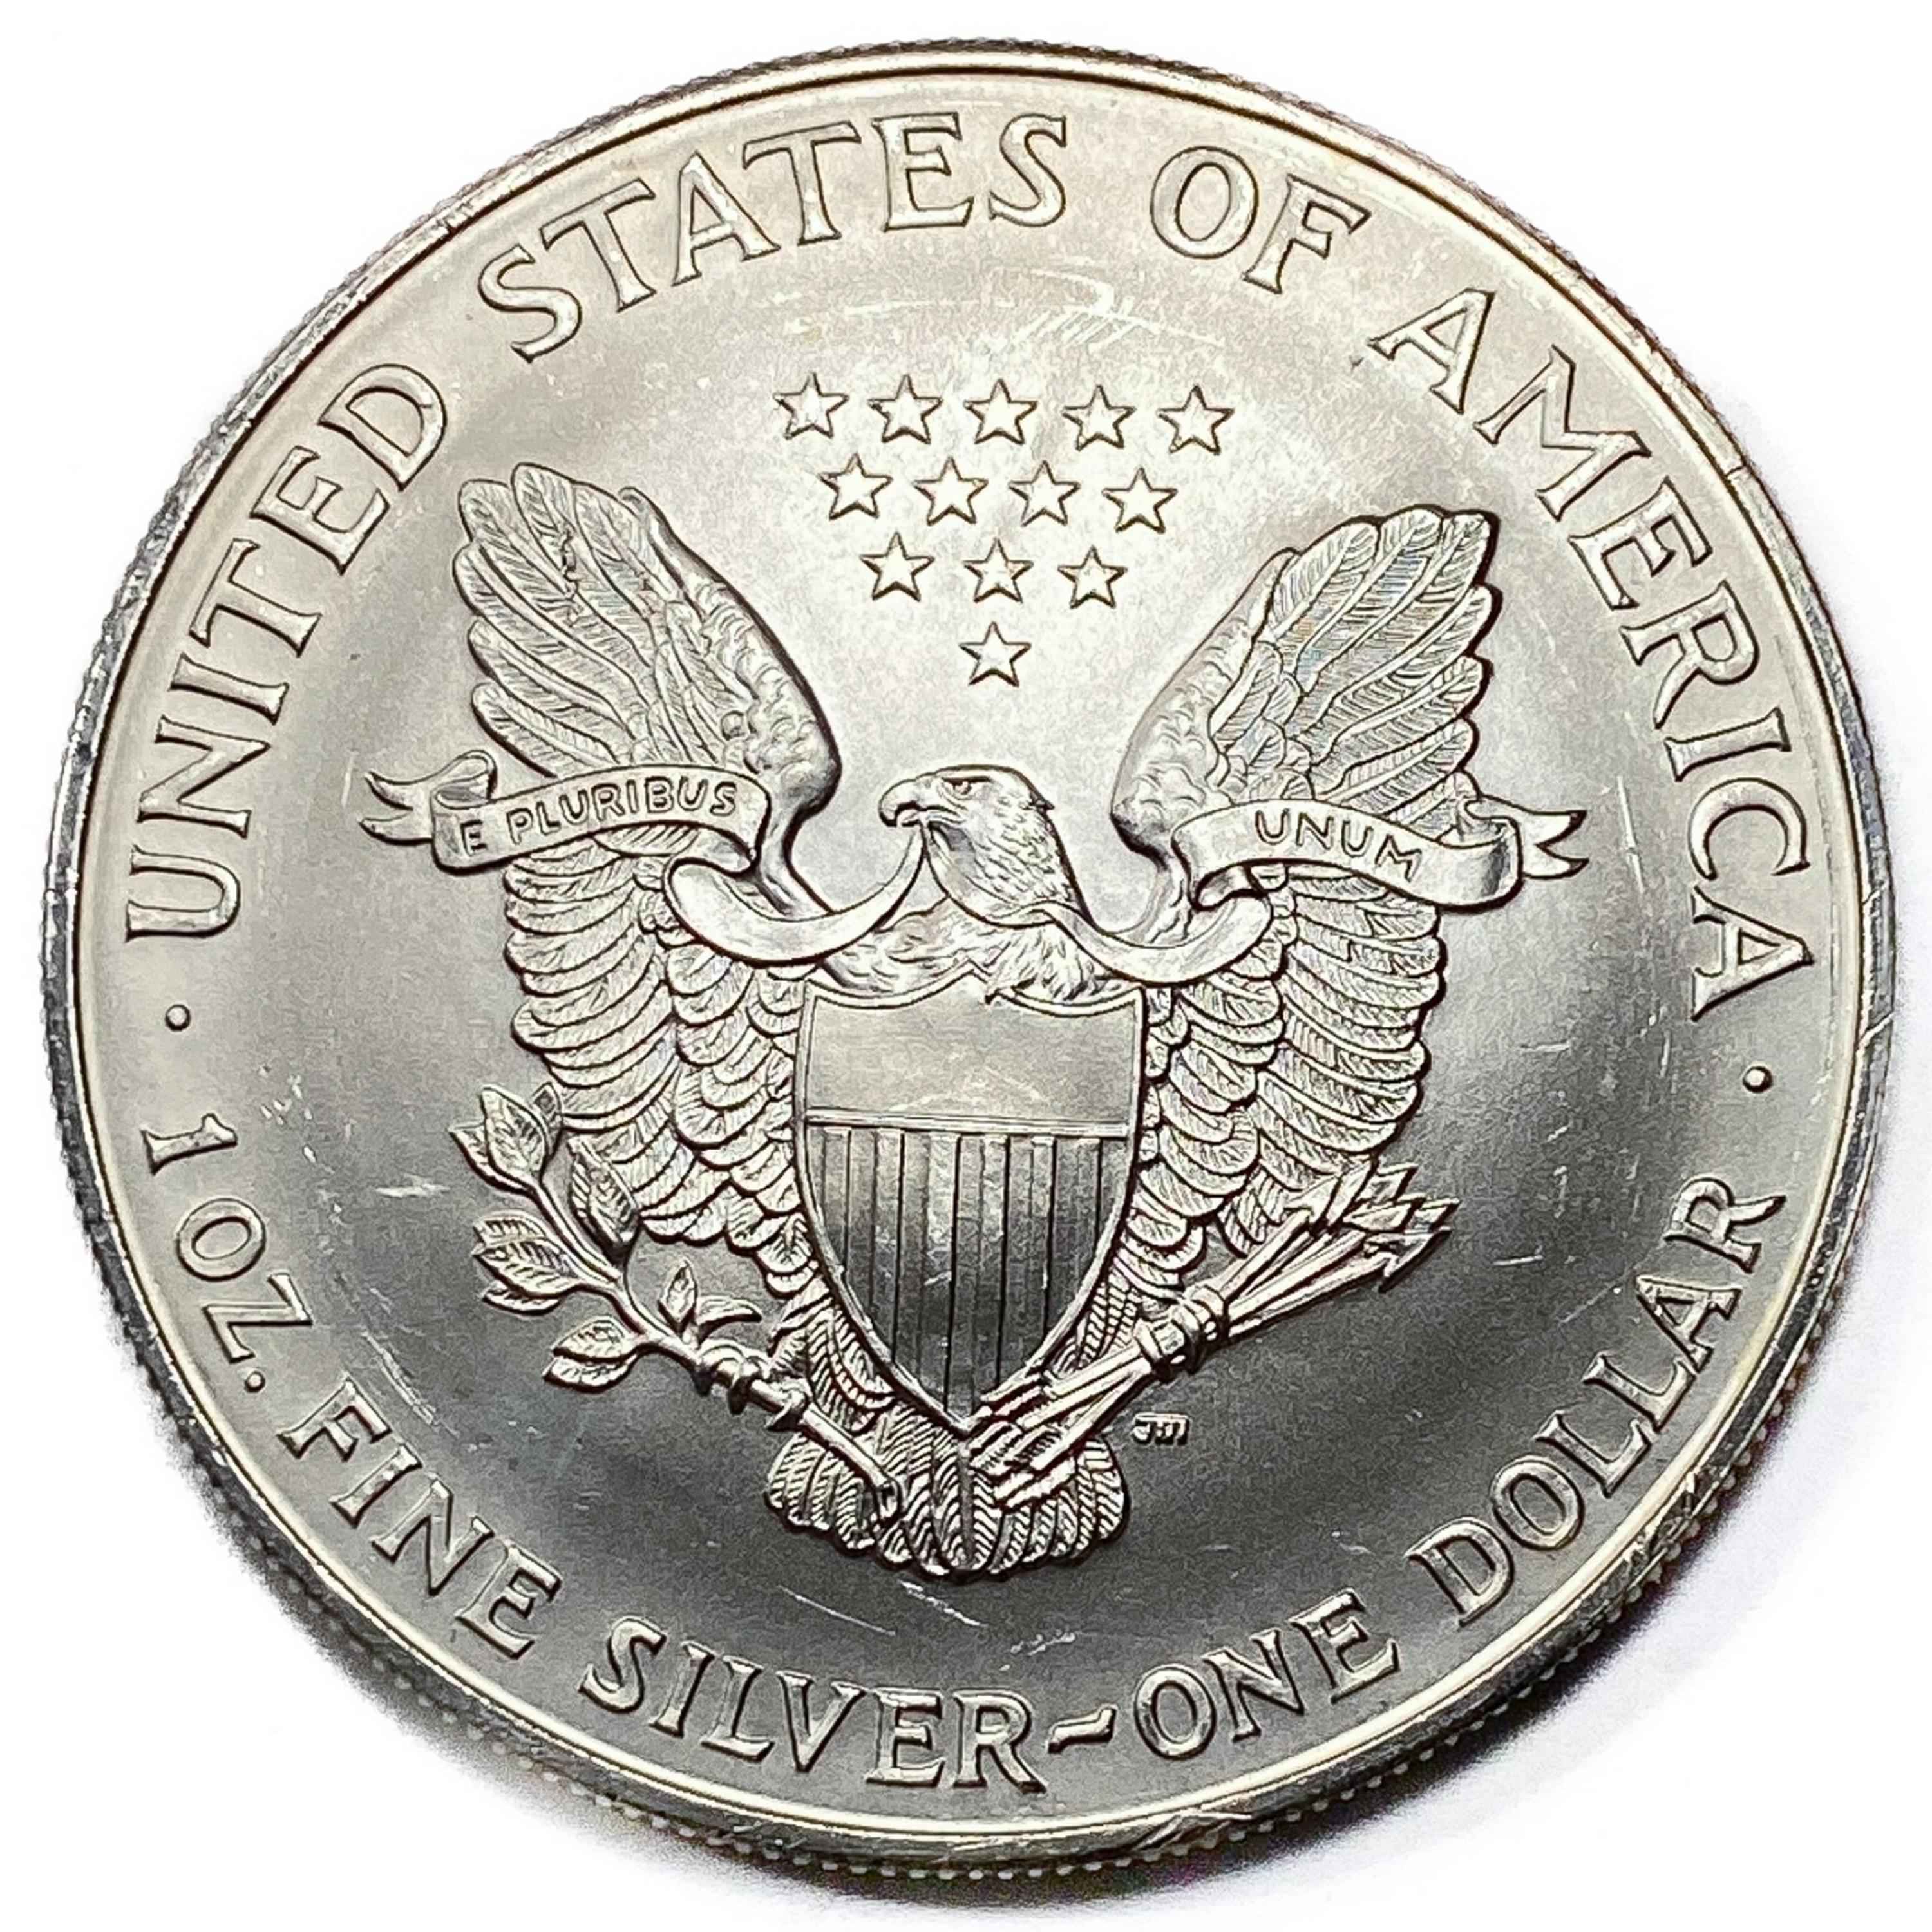 American 1oz Silver Eagle Roll (20 Coins)